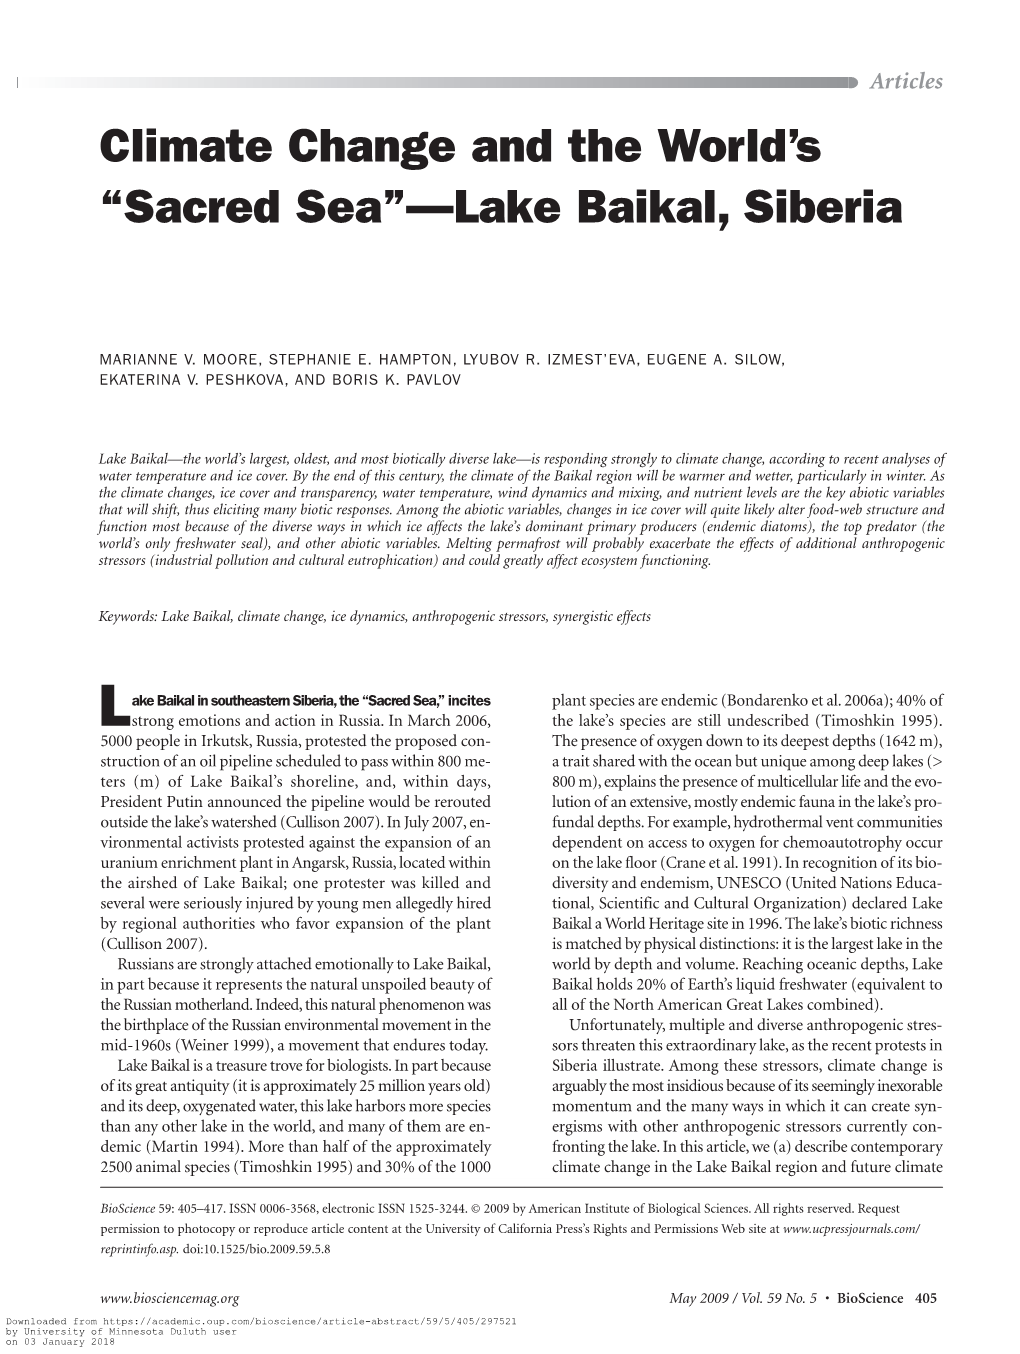 Climate Change and the World's “Sacred Sea”—Lake Baikal, Siberia